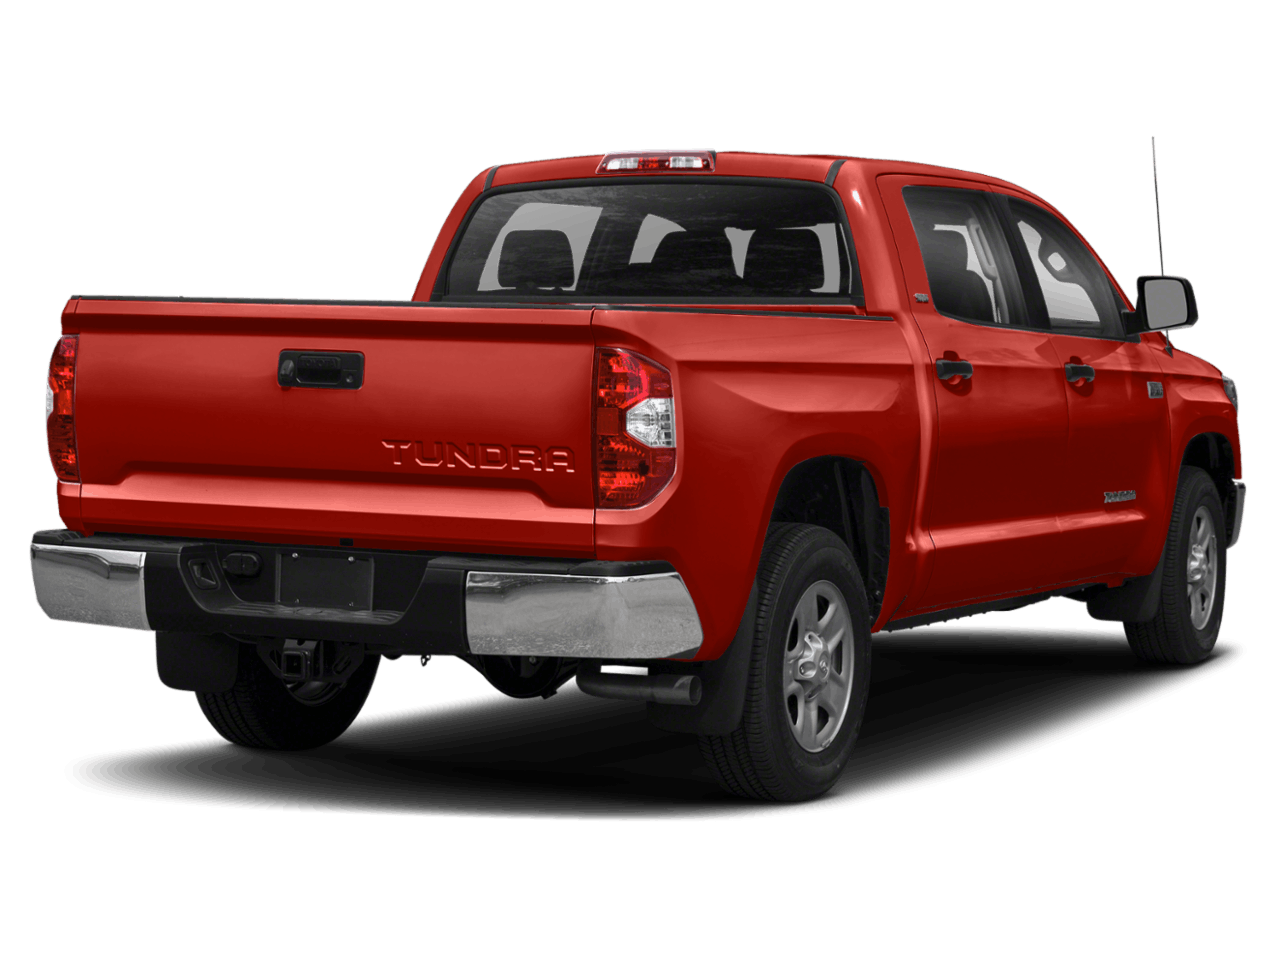 2018 Toyota Tundra 4WD Standard Bed,Crew Cab Pickup